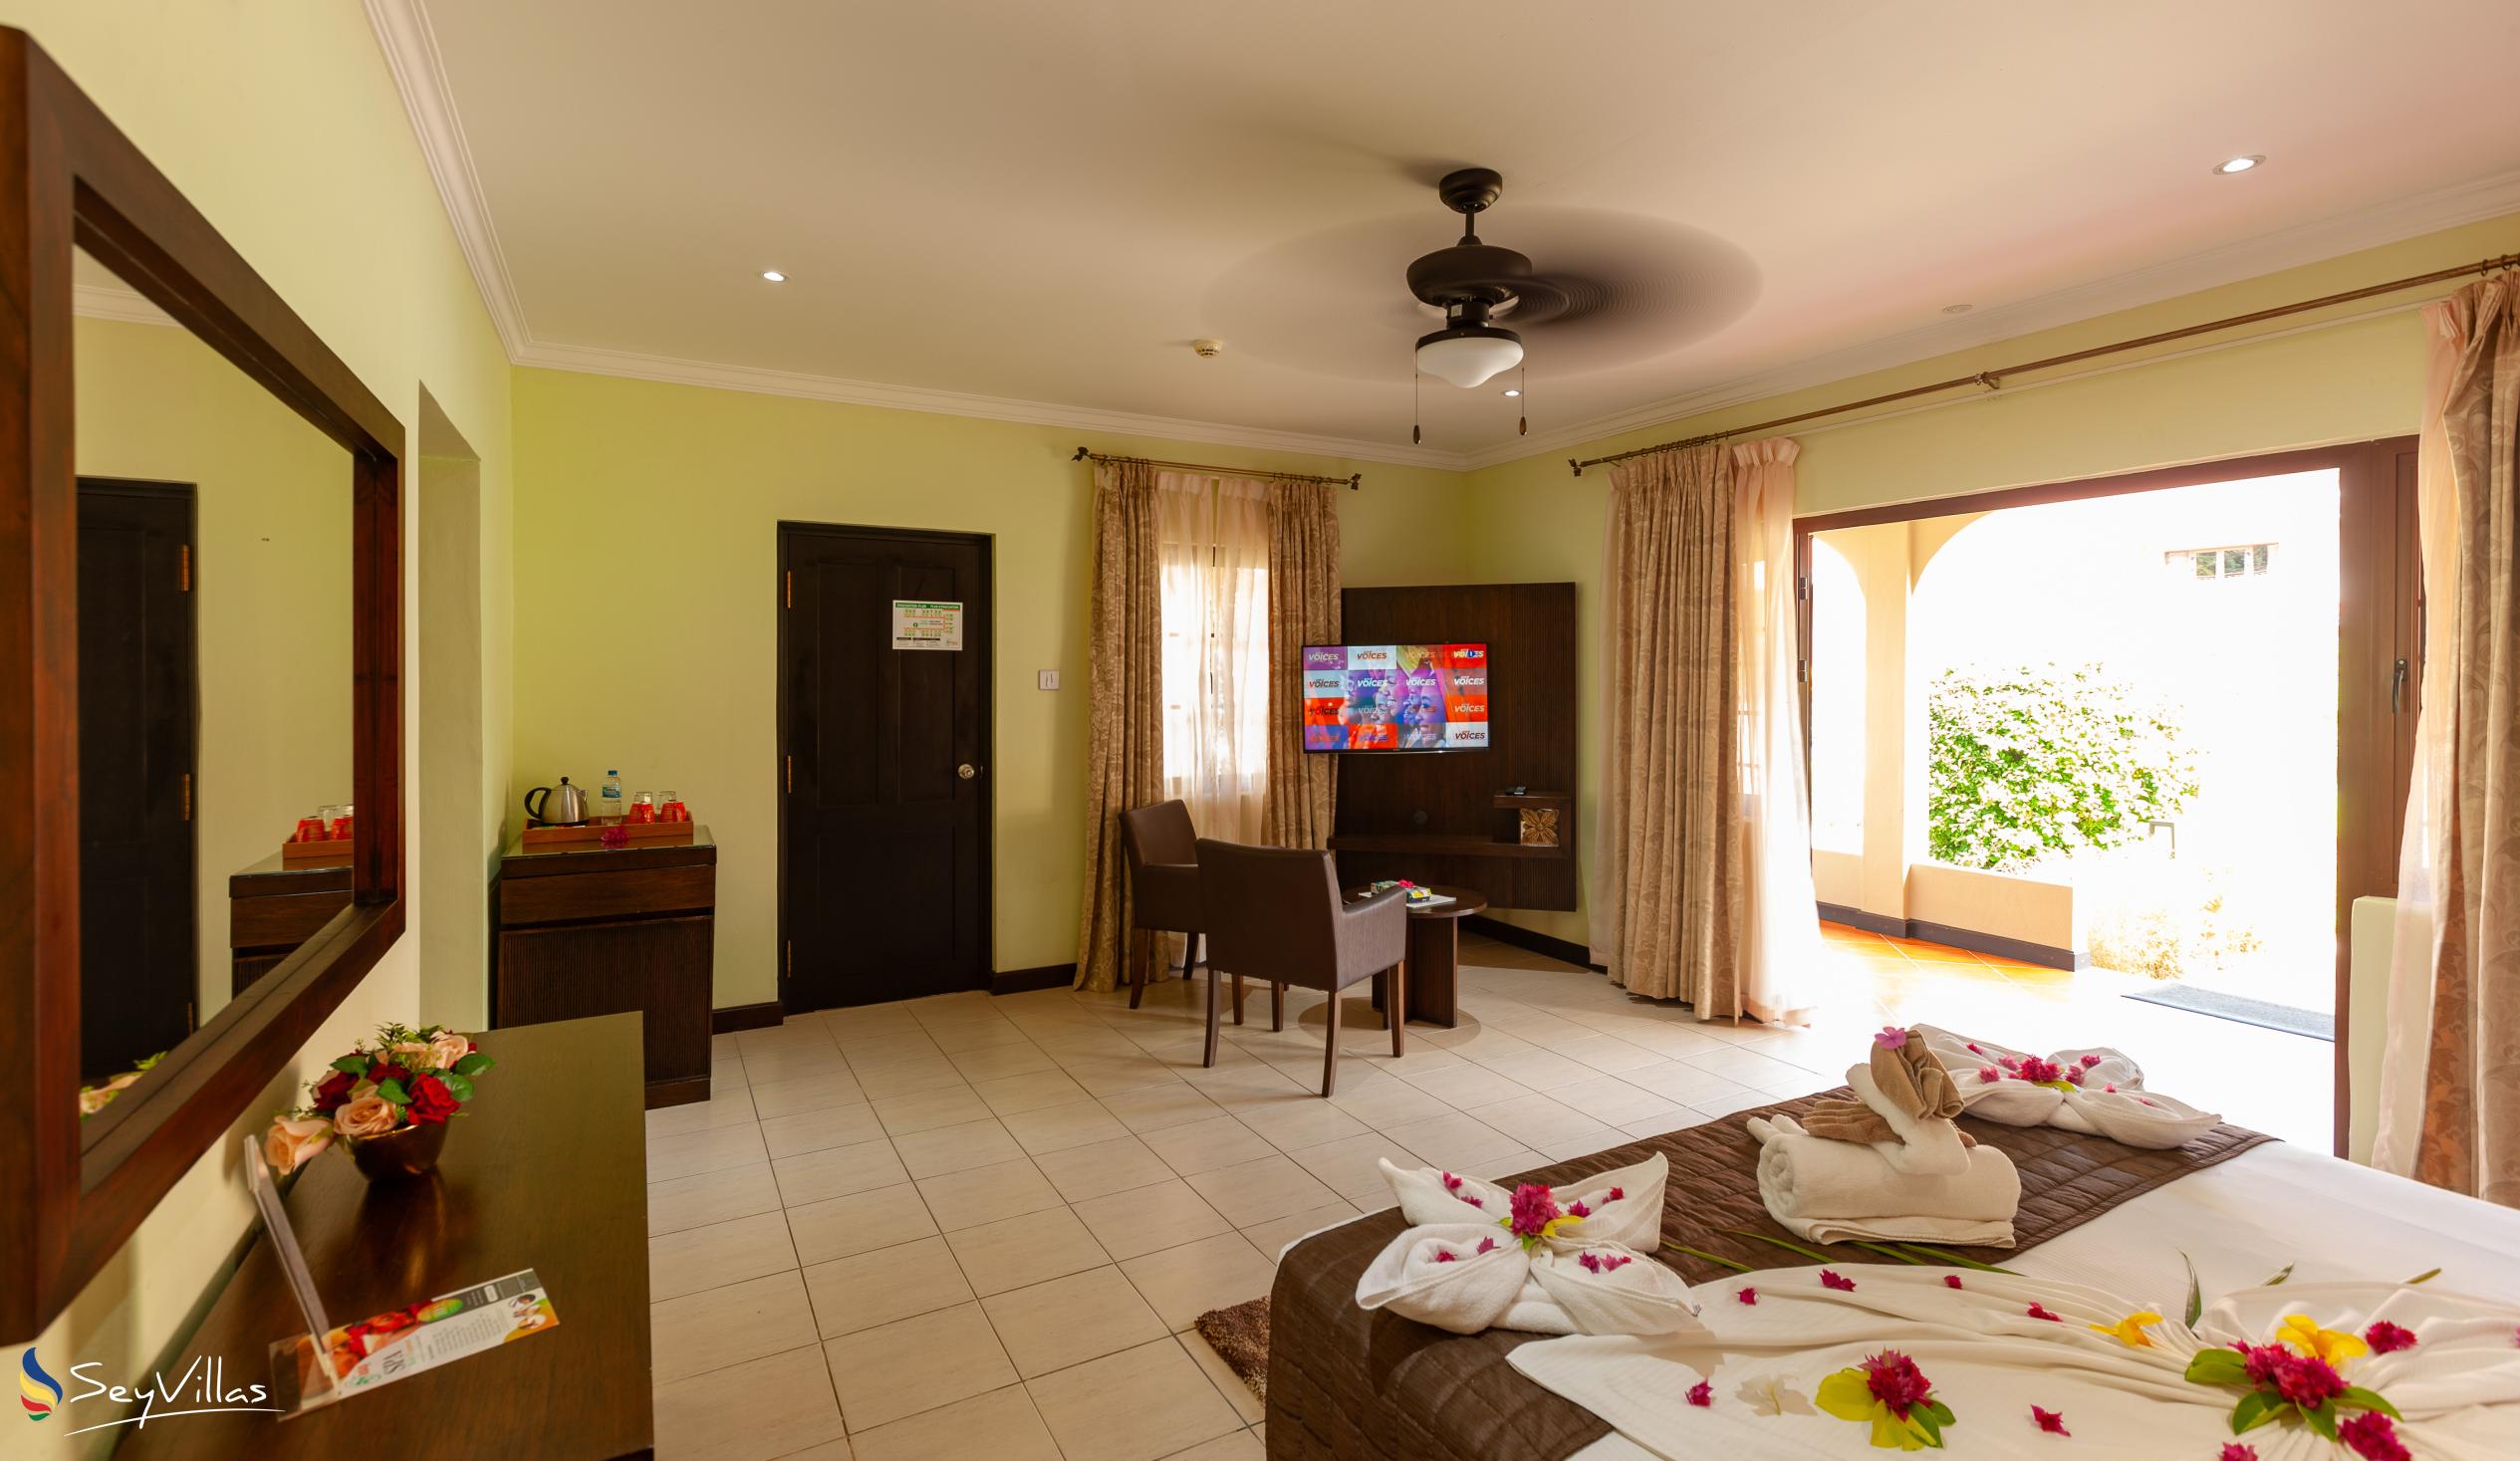 Photo 45: Oasis Hotel, Restaurant & Spa - Superior Room - Praslin (Seychelles)